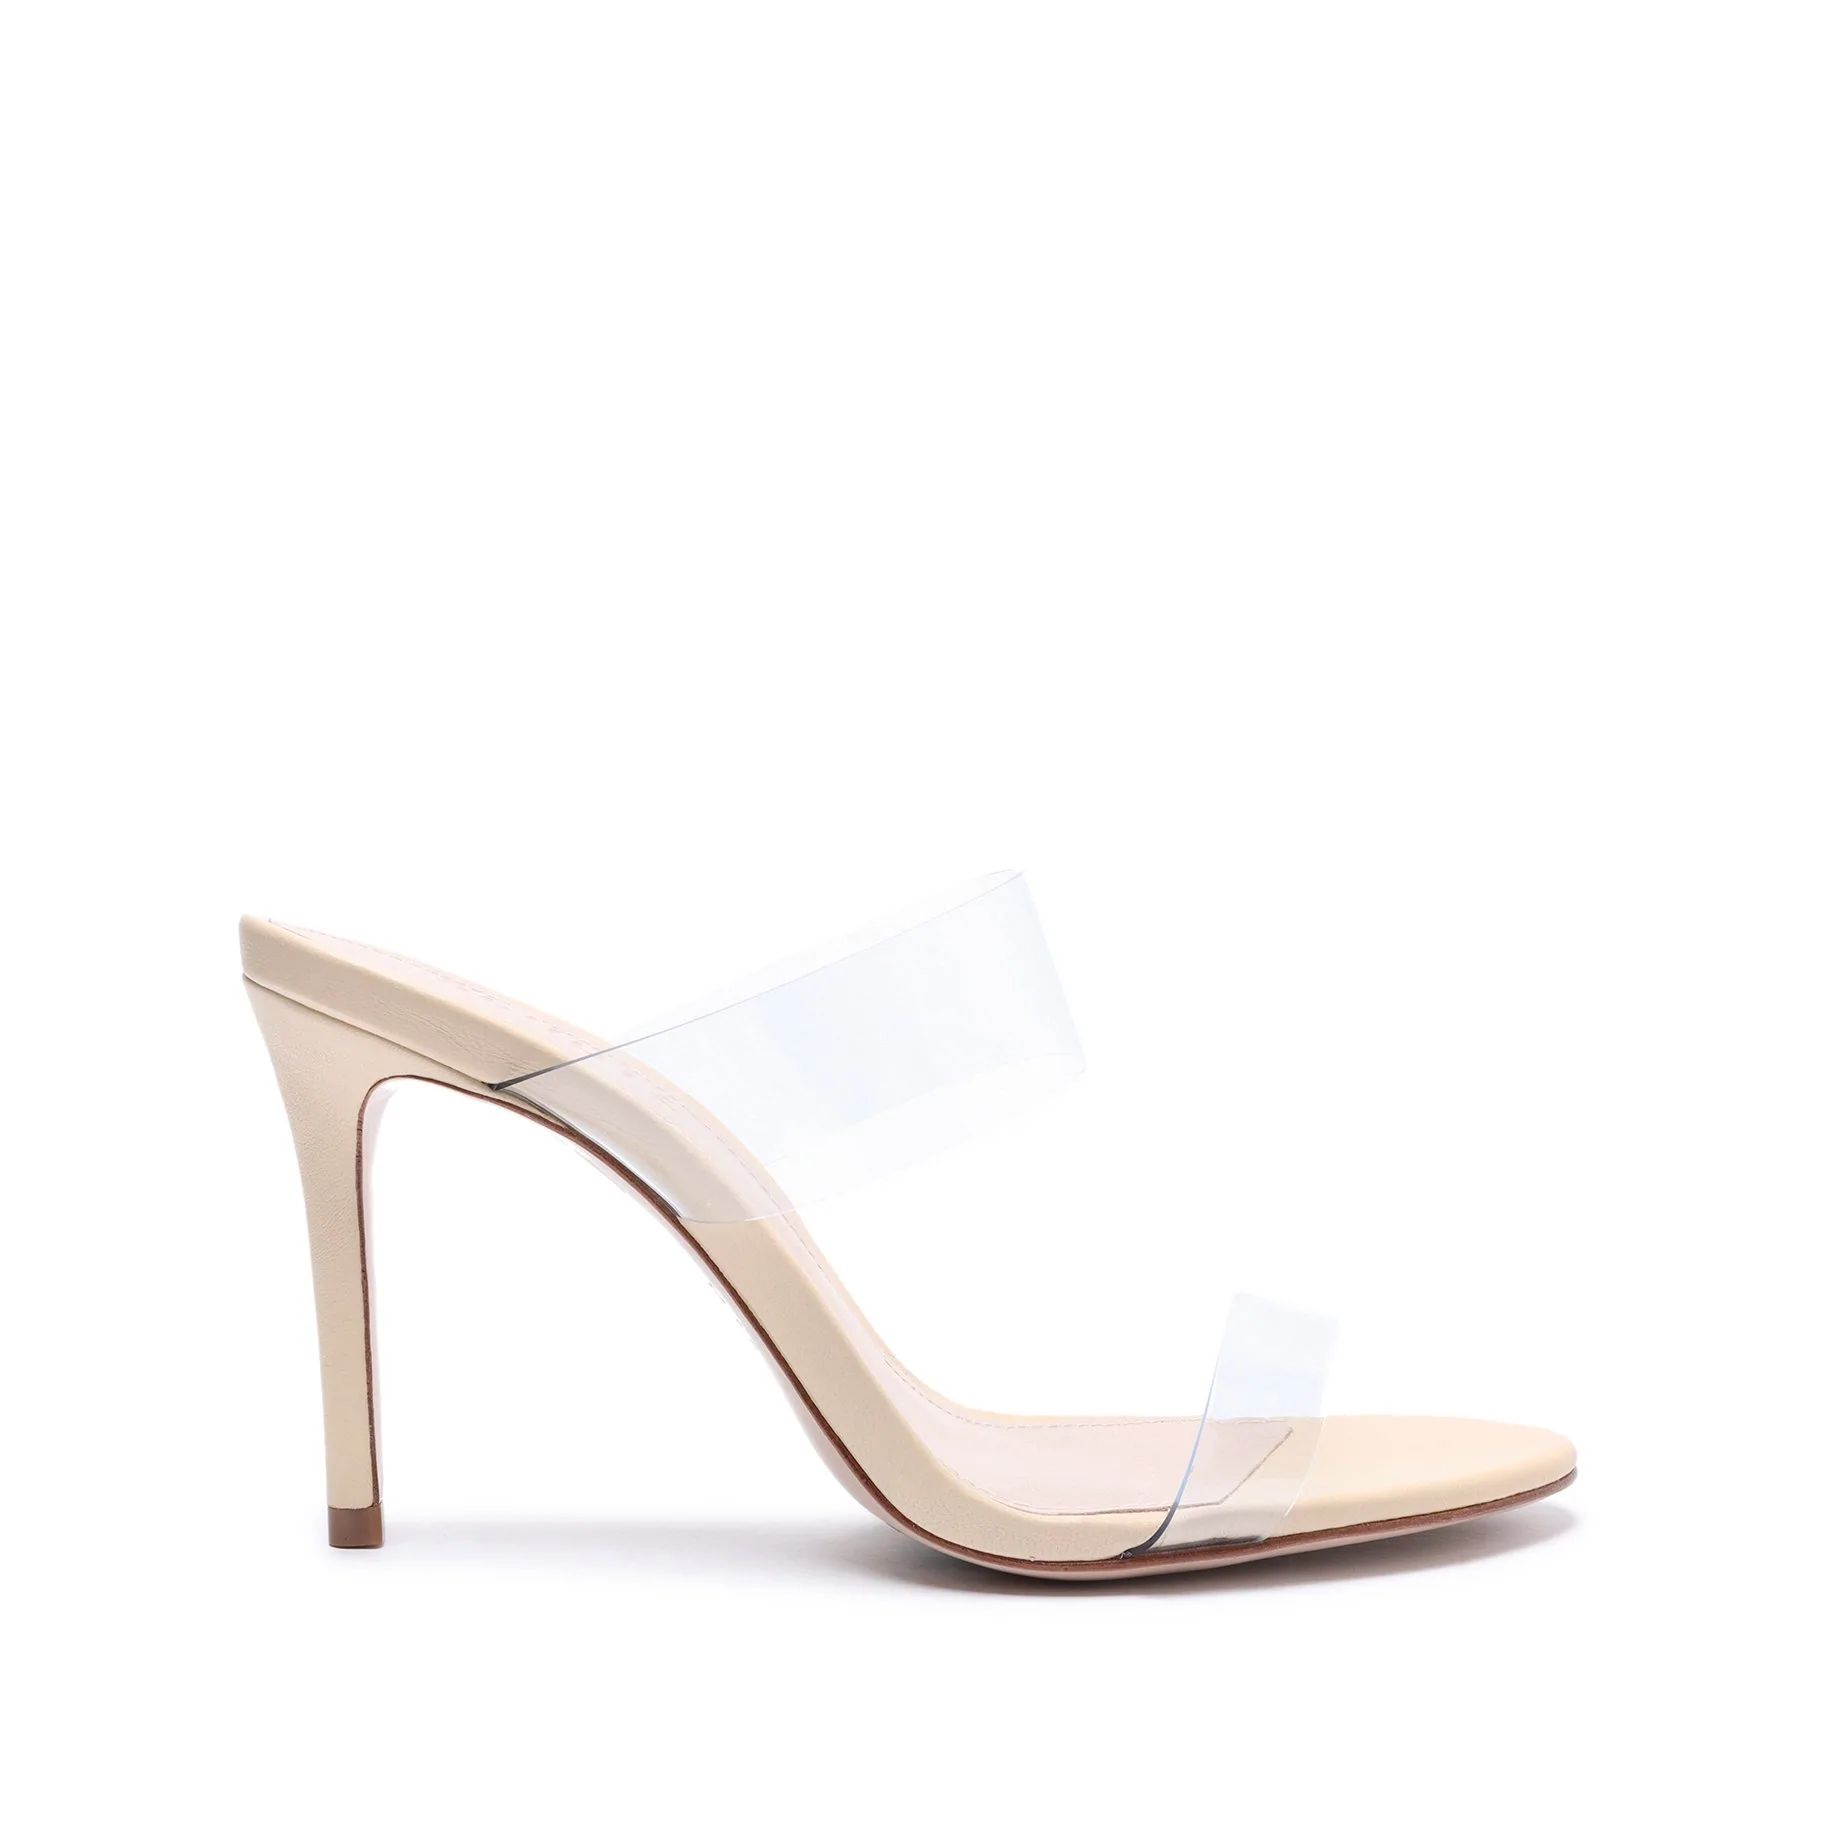 Ariella Sandal: Minimalist Sandal | Schutz | Schutz Shoes (US)